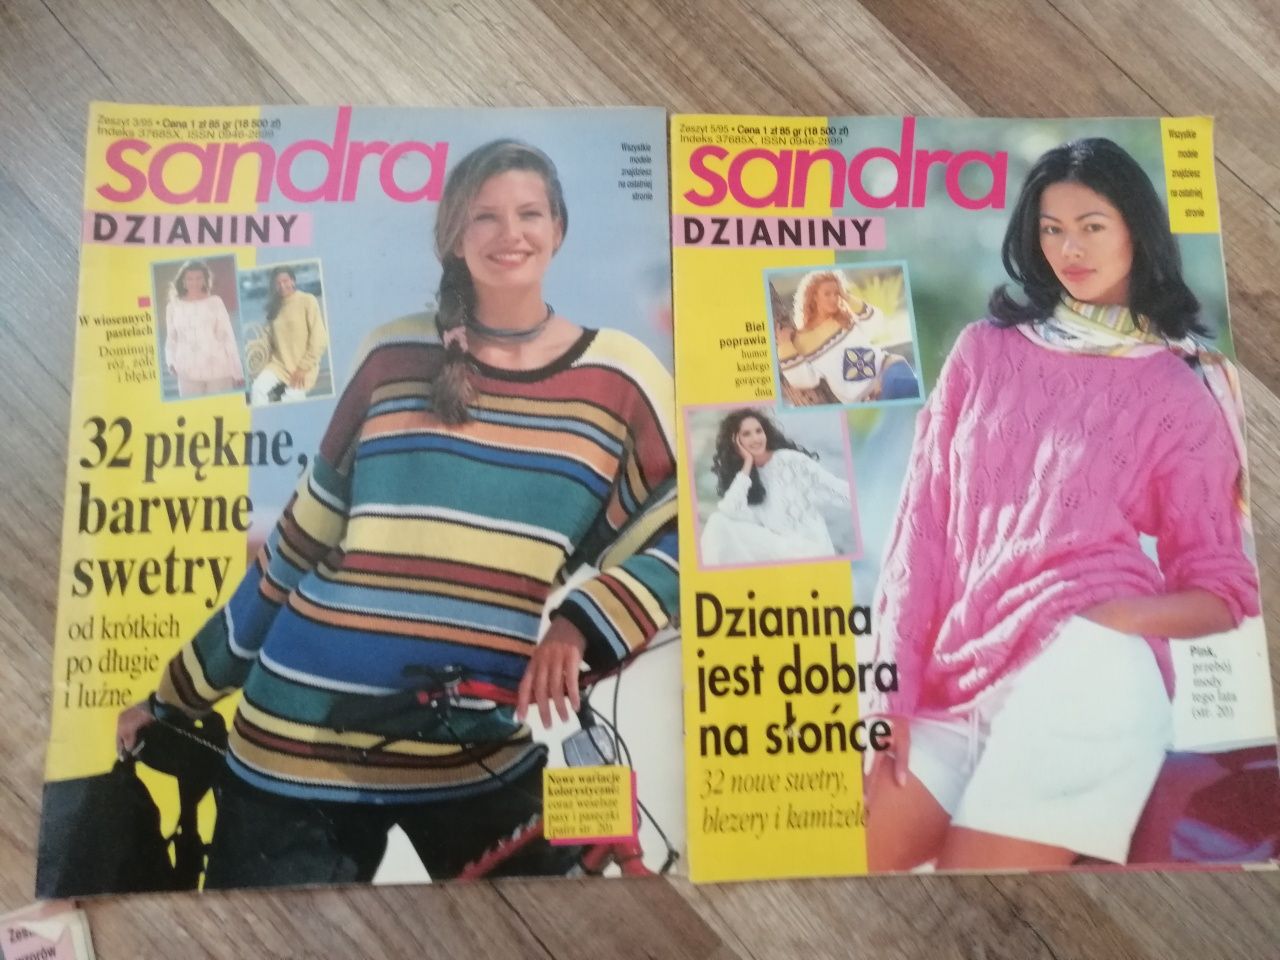 Sandra gazeta magazyn czasopismo 1995 rok